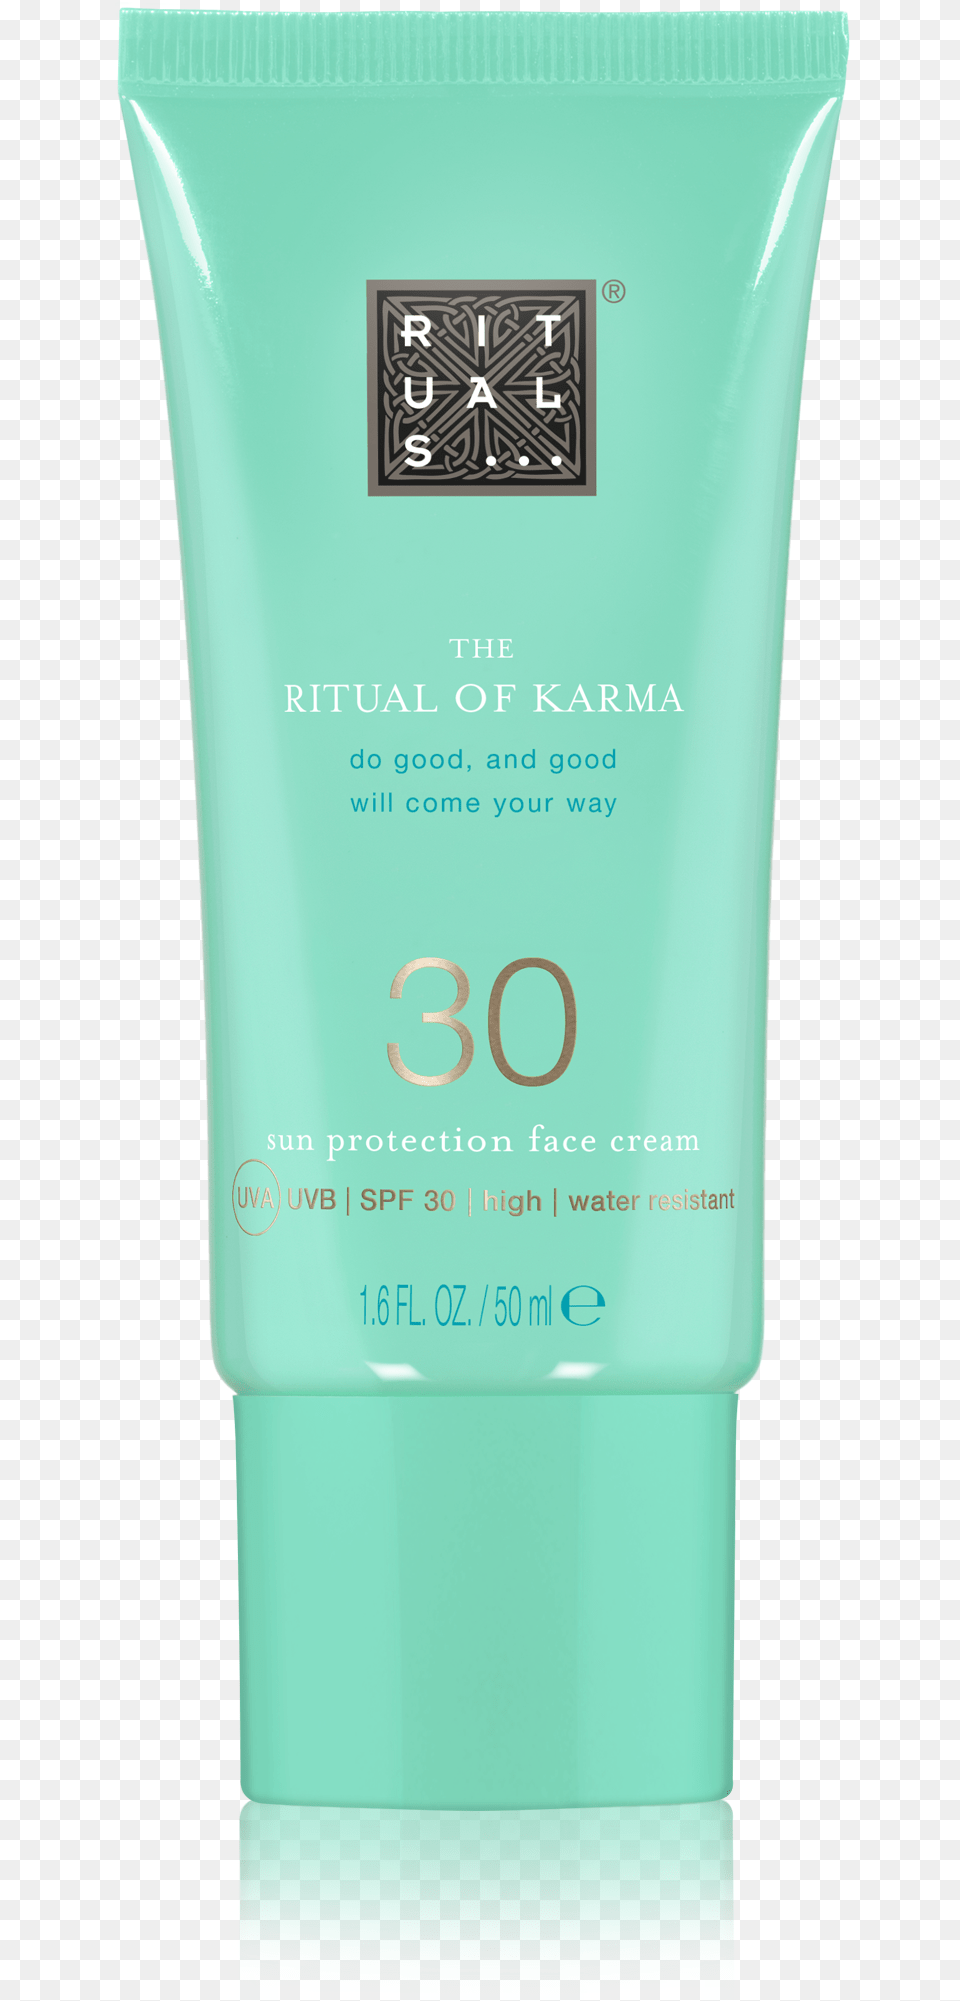 The Ritual Of Karma Sun Protection Face Cream 30title Rituals Of Karma Face Cream, Bottle, Lotion, Cosmetics, Sunscreen Png Image